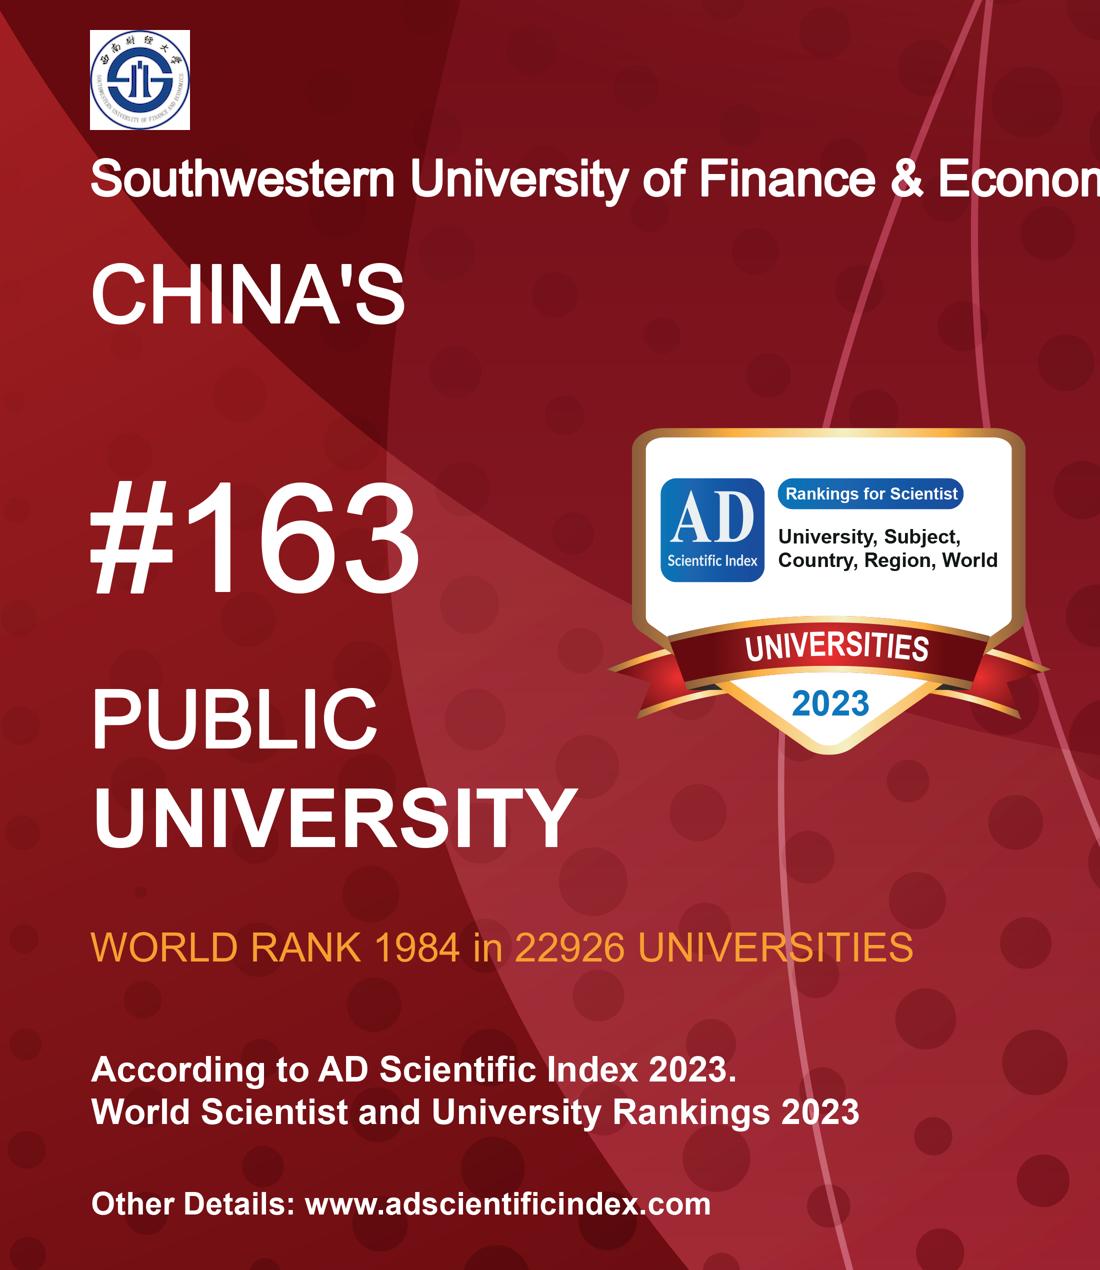 Southwestern University of Finance & Economics